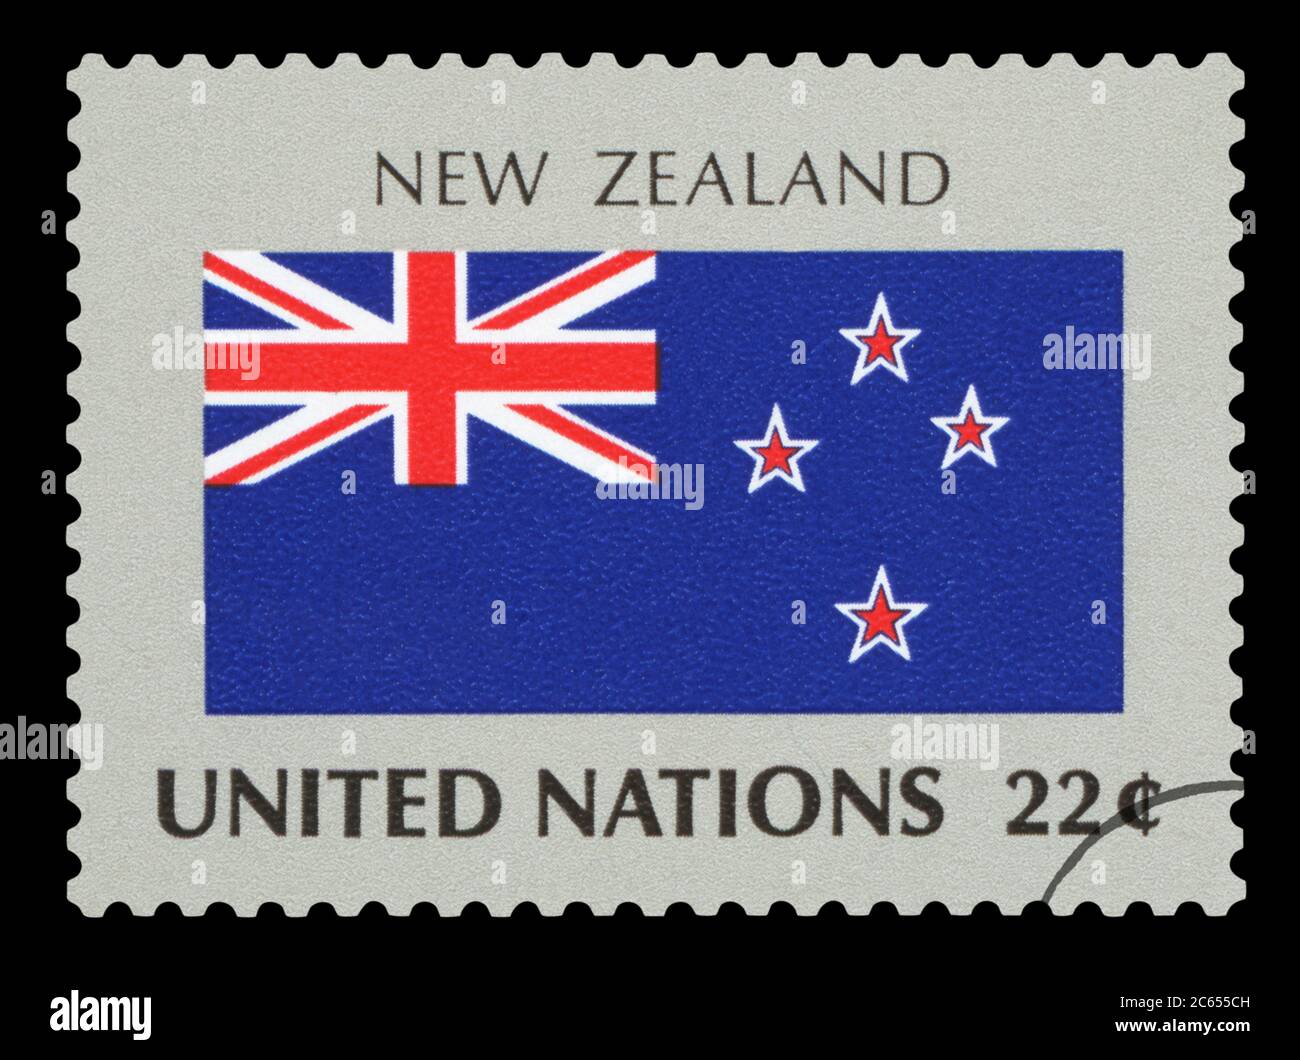 NUOVA ZELANDA - francobollo della bandiera nazionale della Nuova Zelanda, Serie delle Nazioni Unite, circa 1984. Foto Stock